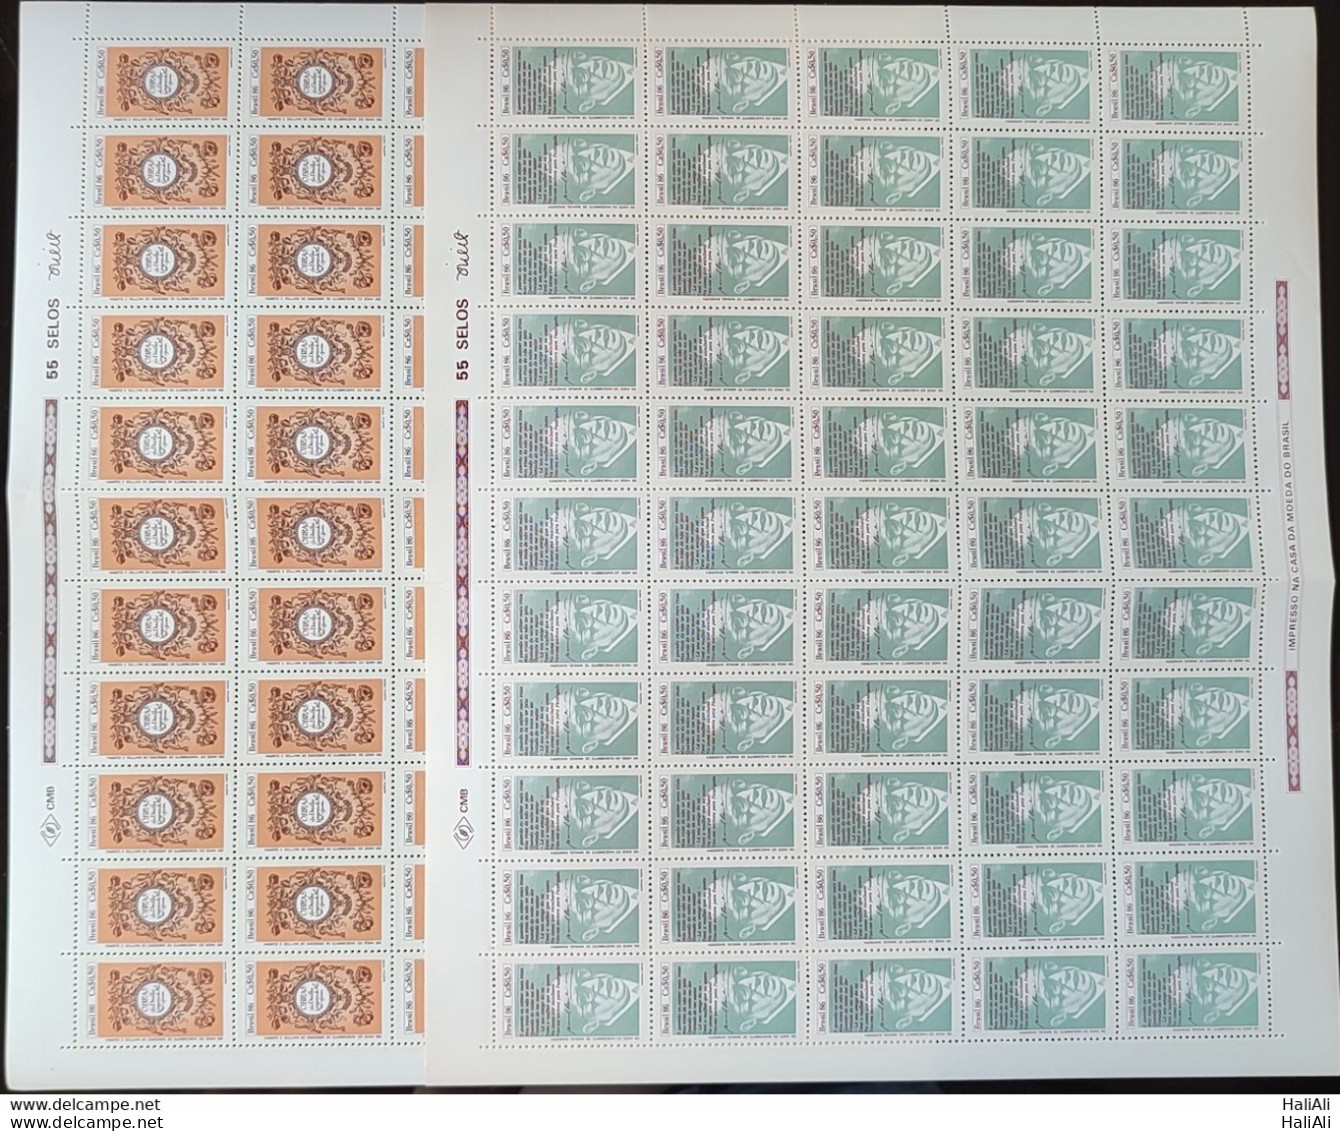 C 1527 Brazil Stamp Book Day Literature Gregorio De Mattos Guerra Manuel Bandeira 1986 Sheet Complete Series.jpg - Unused Stamps